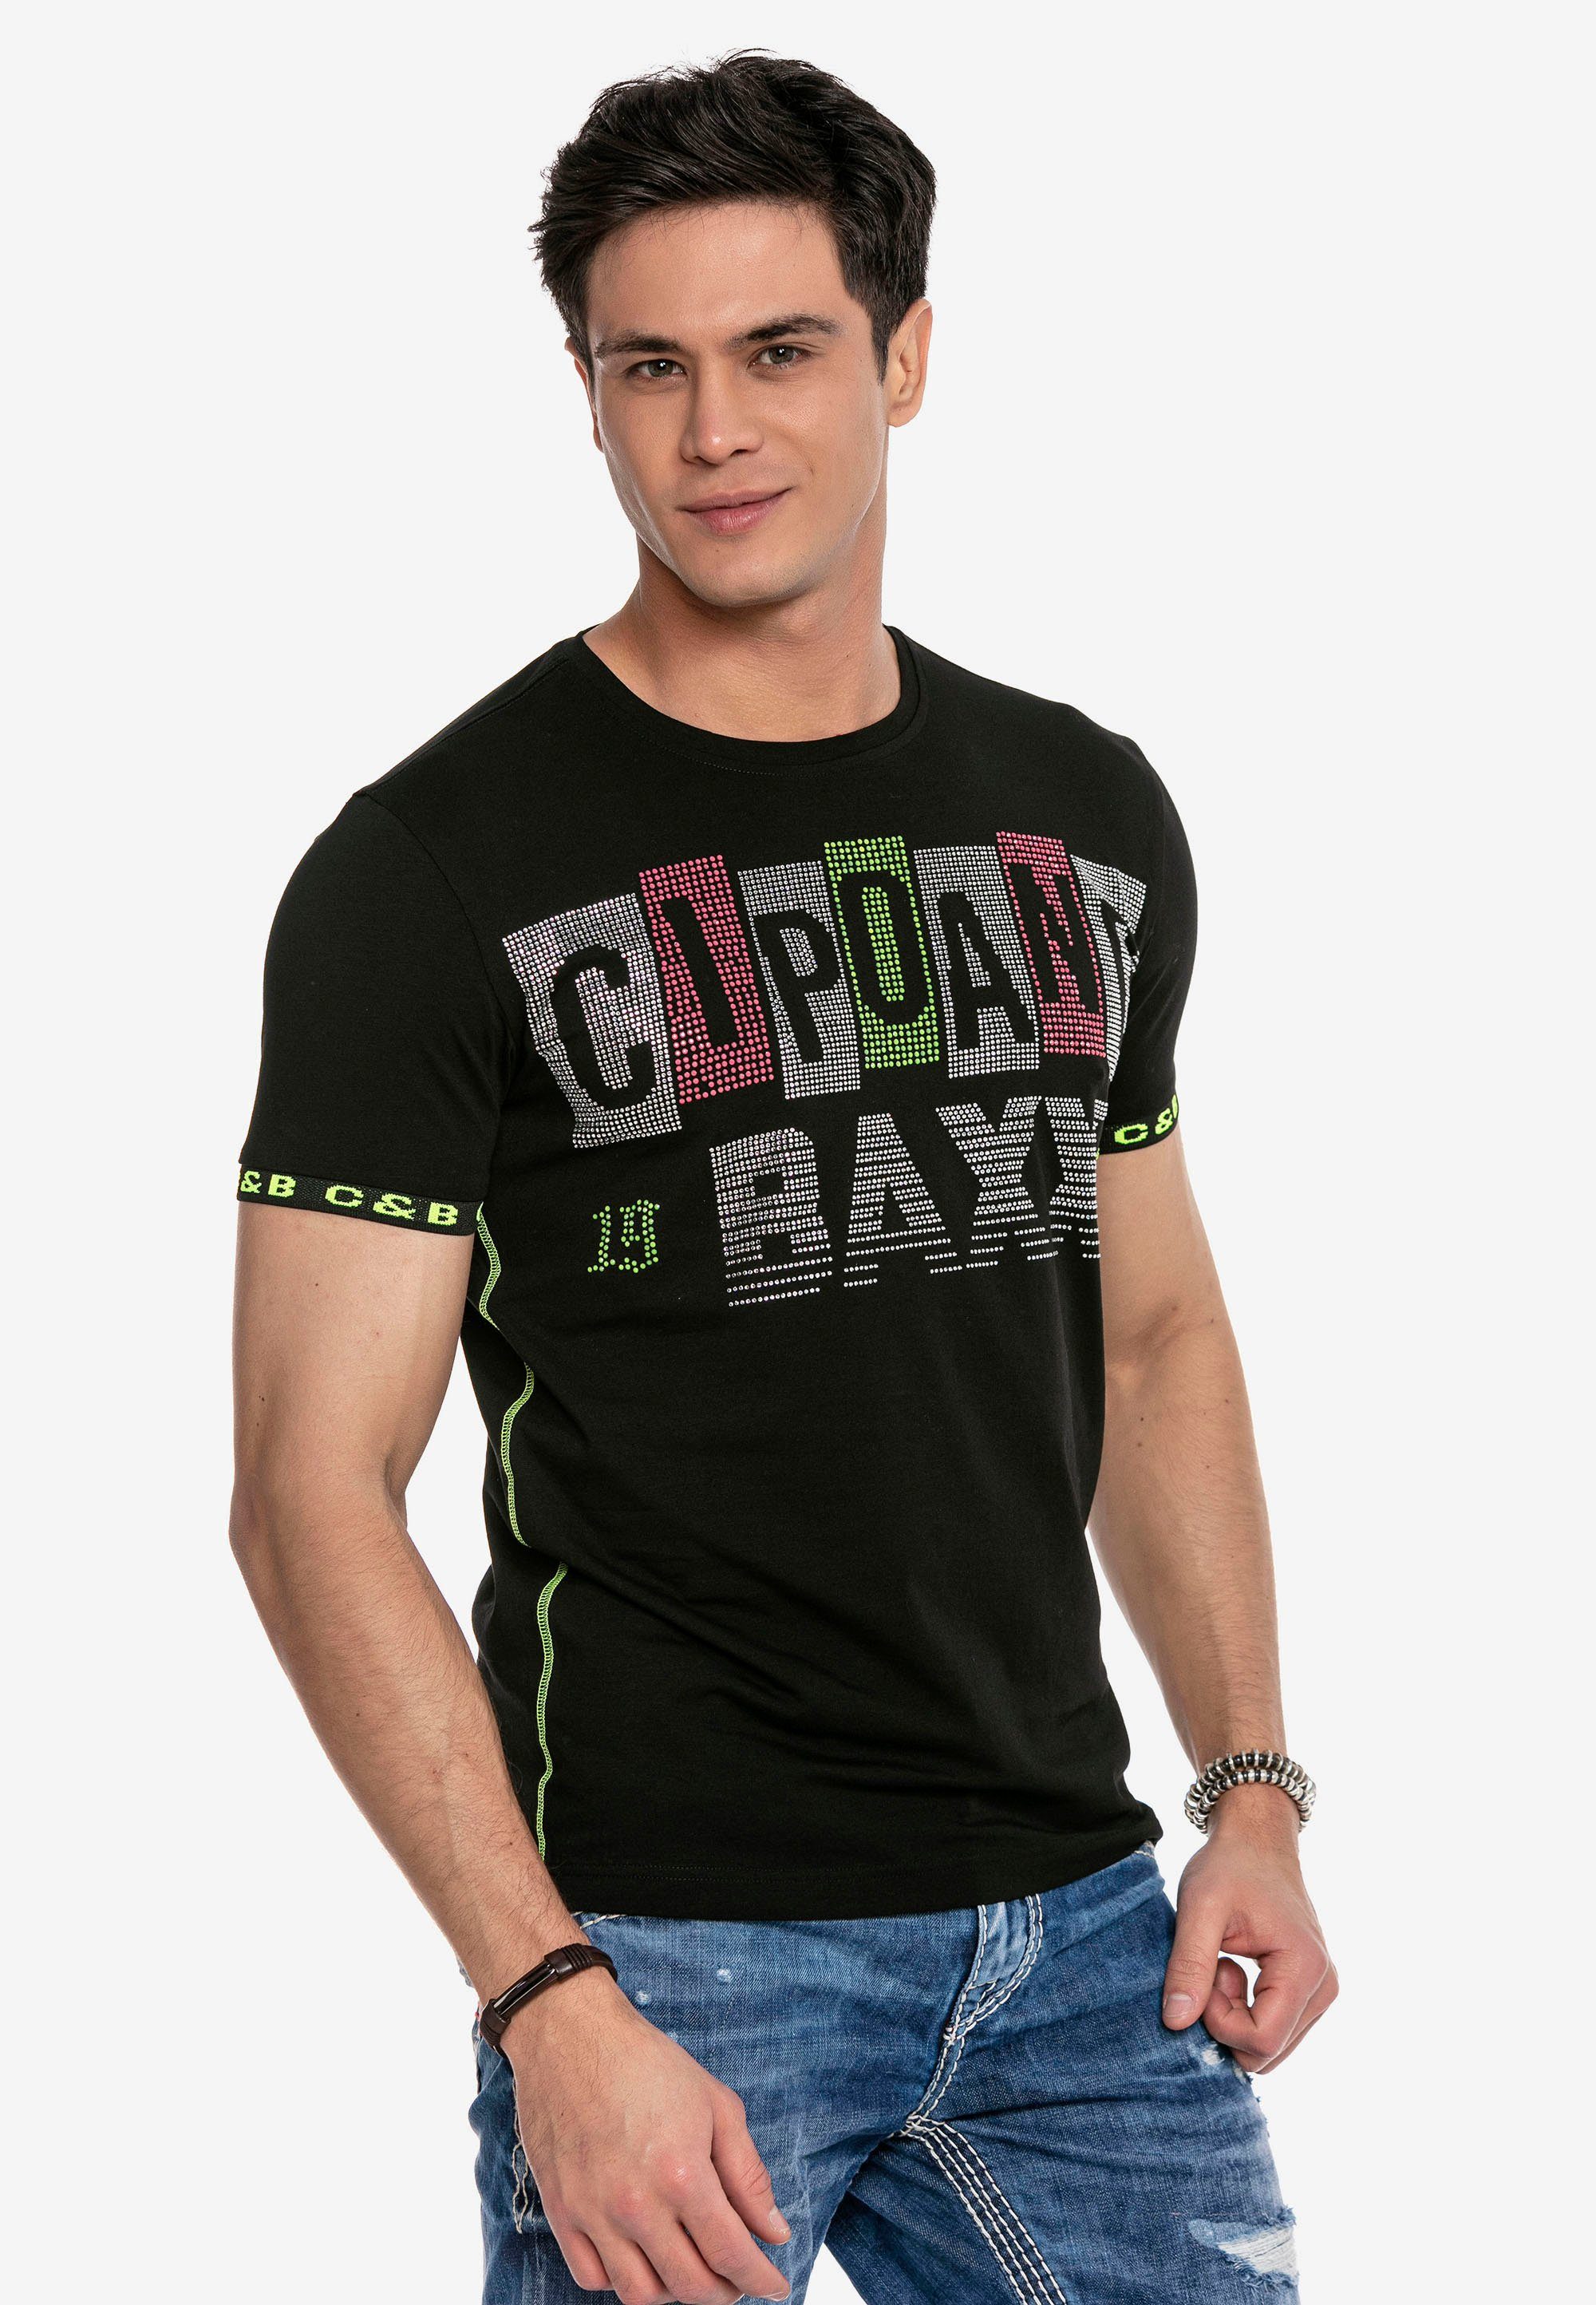 Cipo & Baxx Look T-Shirt extravagantem in